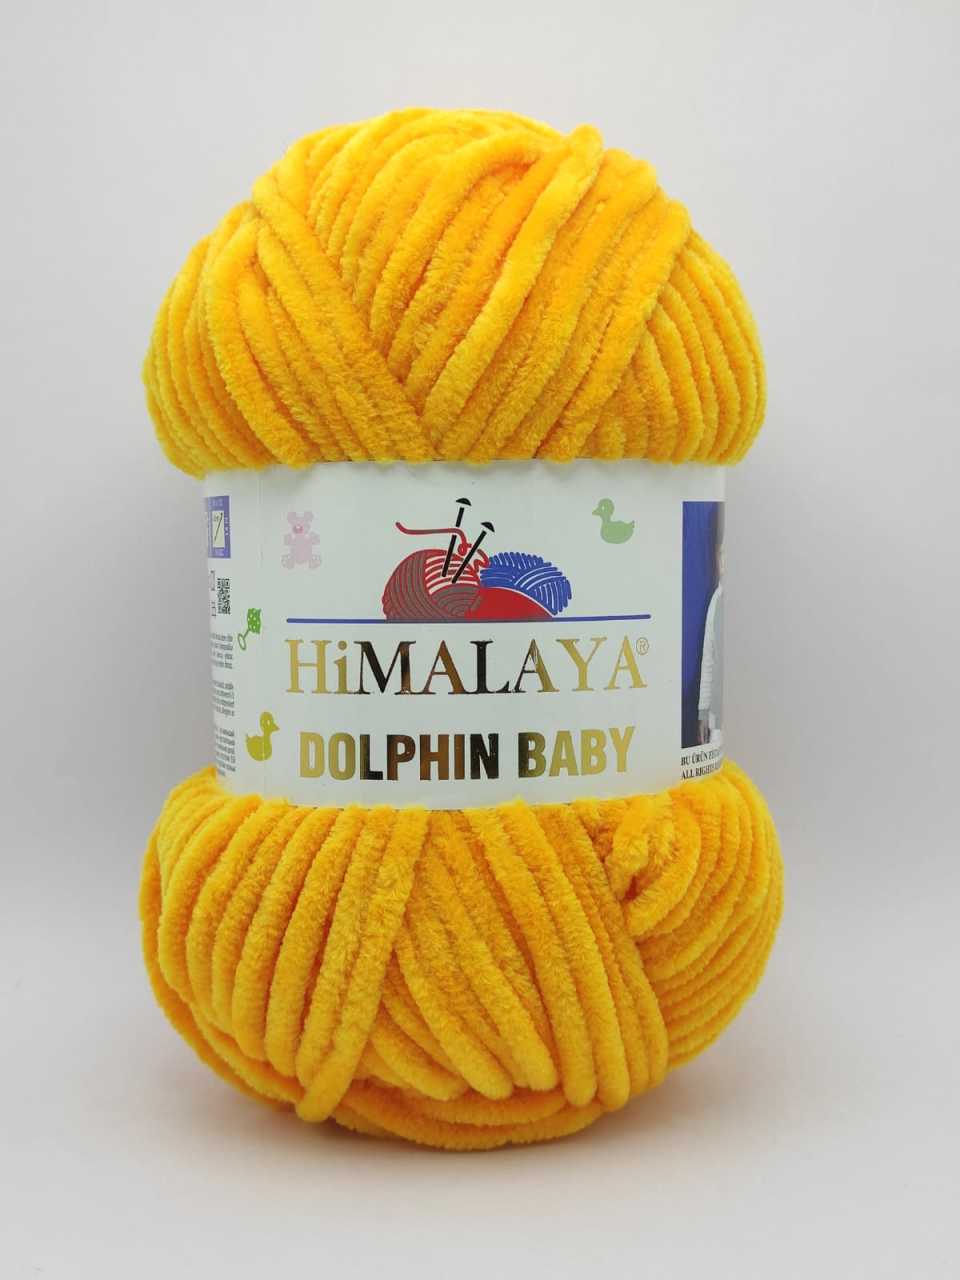 Himalaya Dolphin Baby 80368